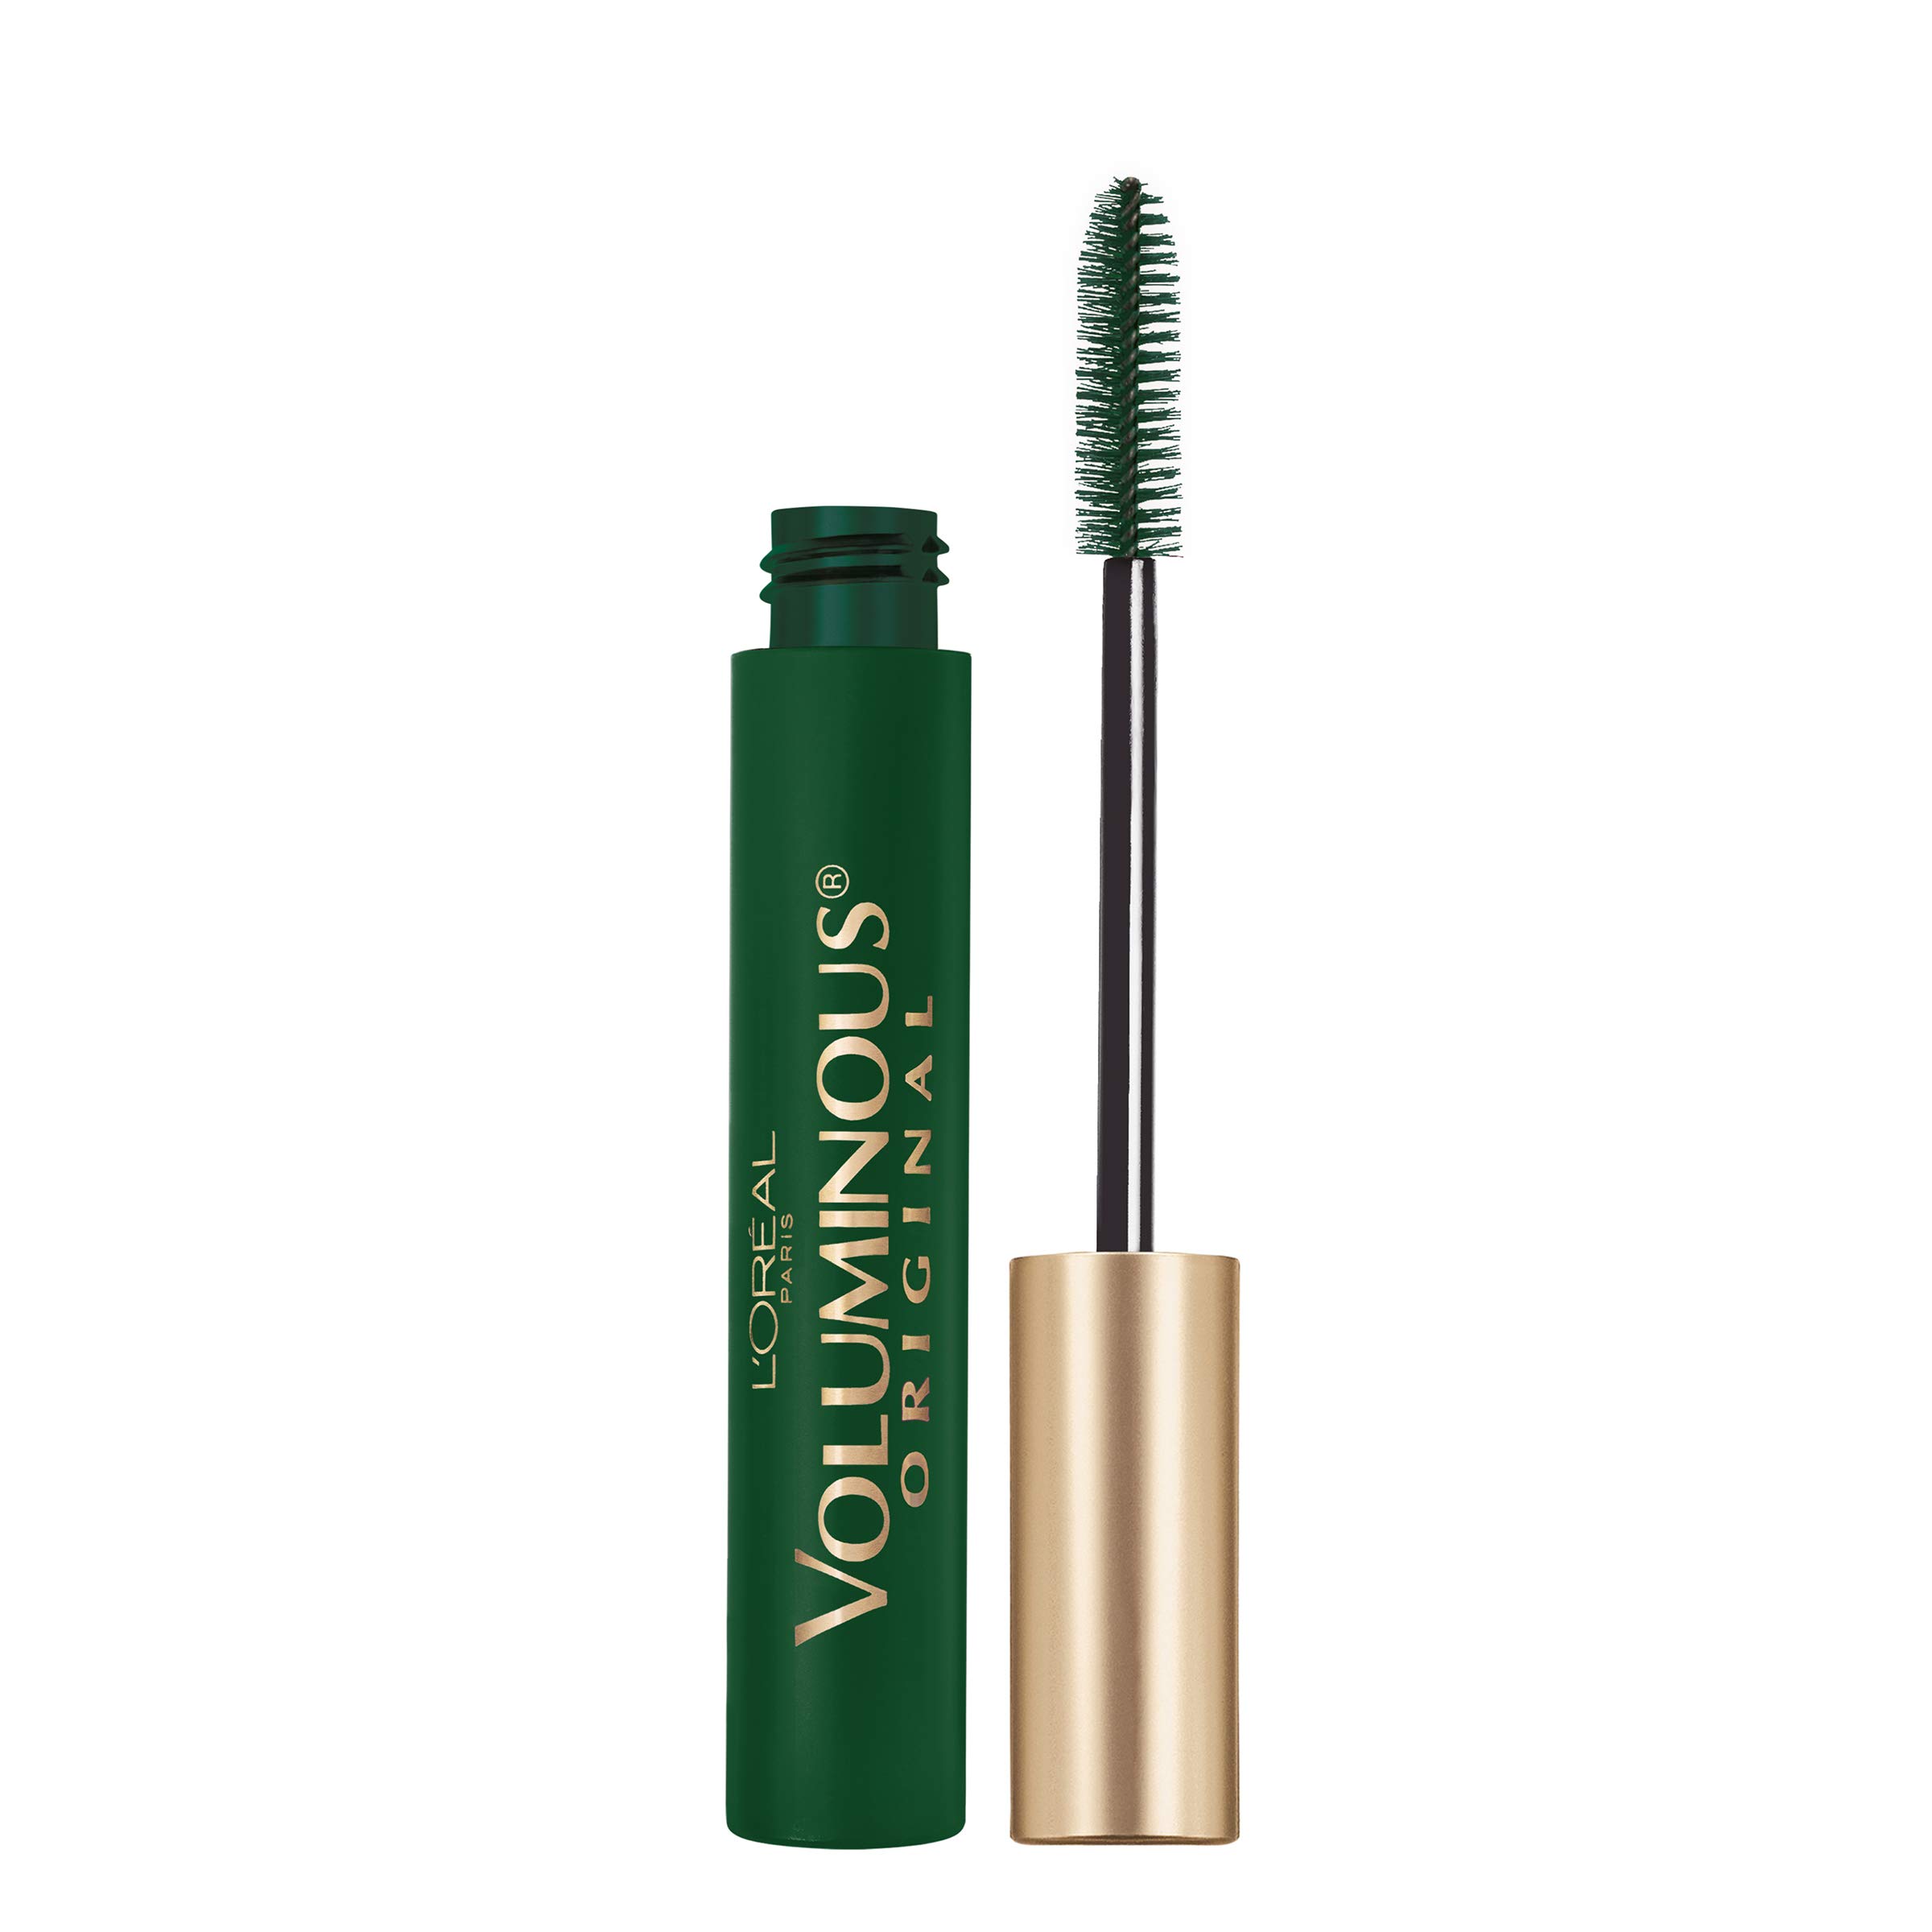 L’Oréal Paris Makeup Voluminous Original Washable Bold Eye Mascara, Deep Green, 0.27 Fl Oz